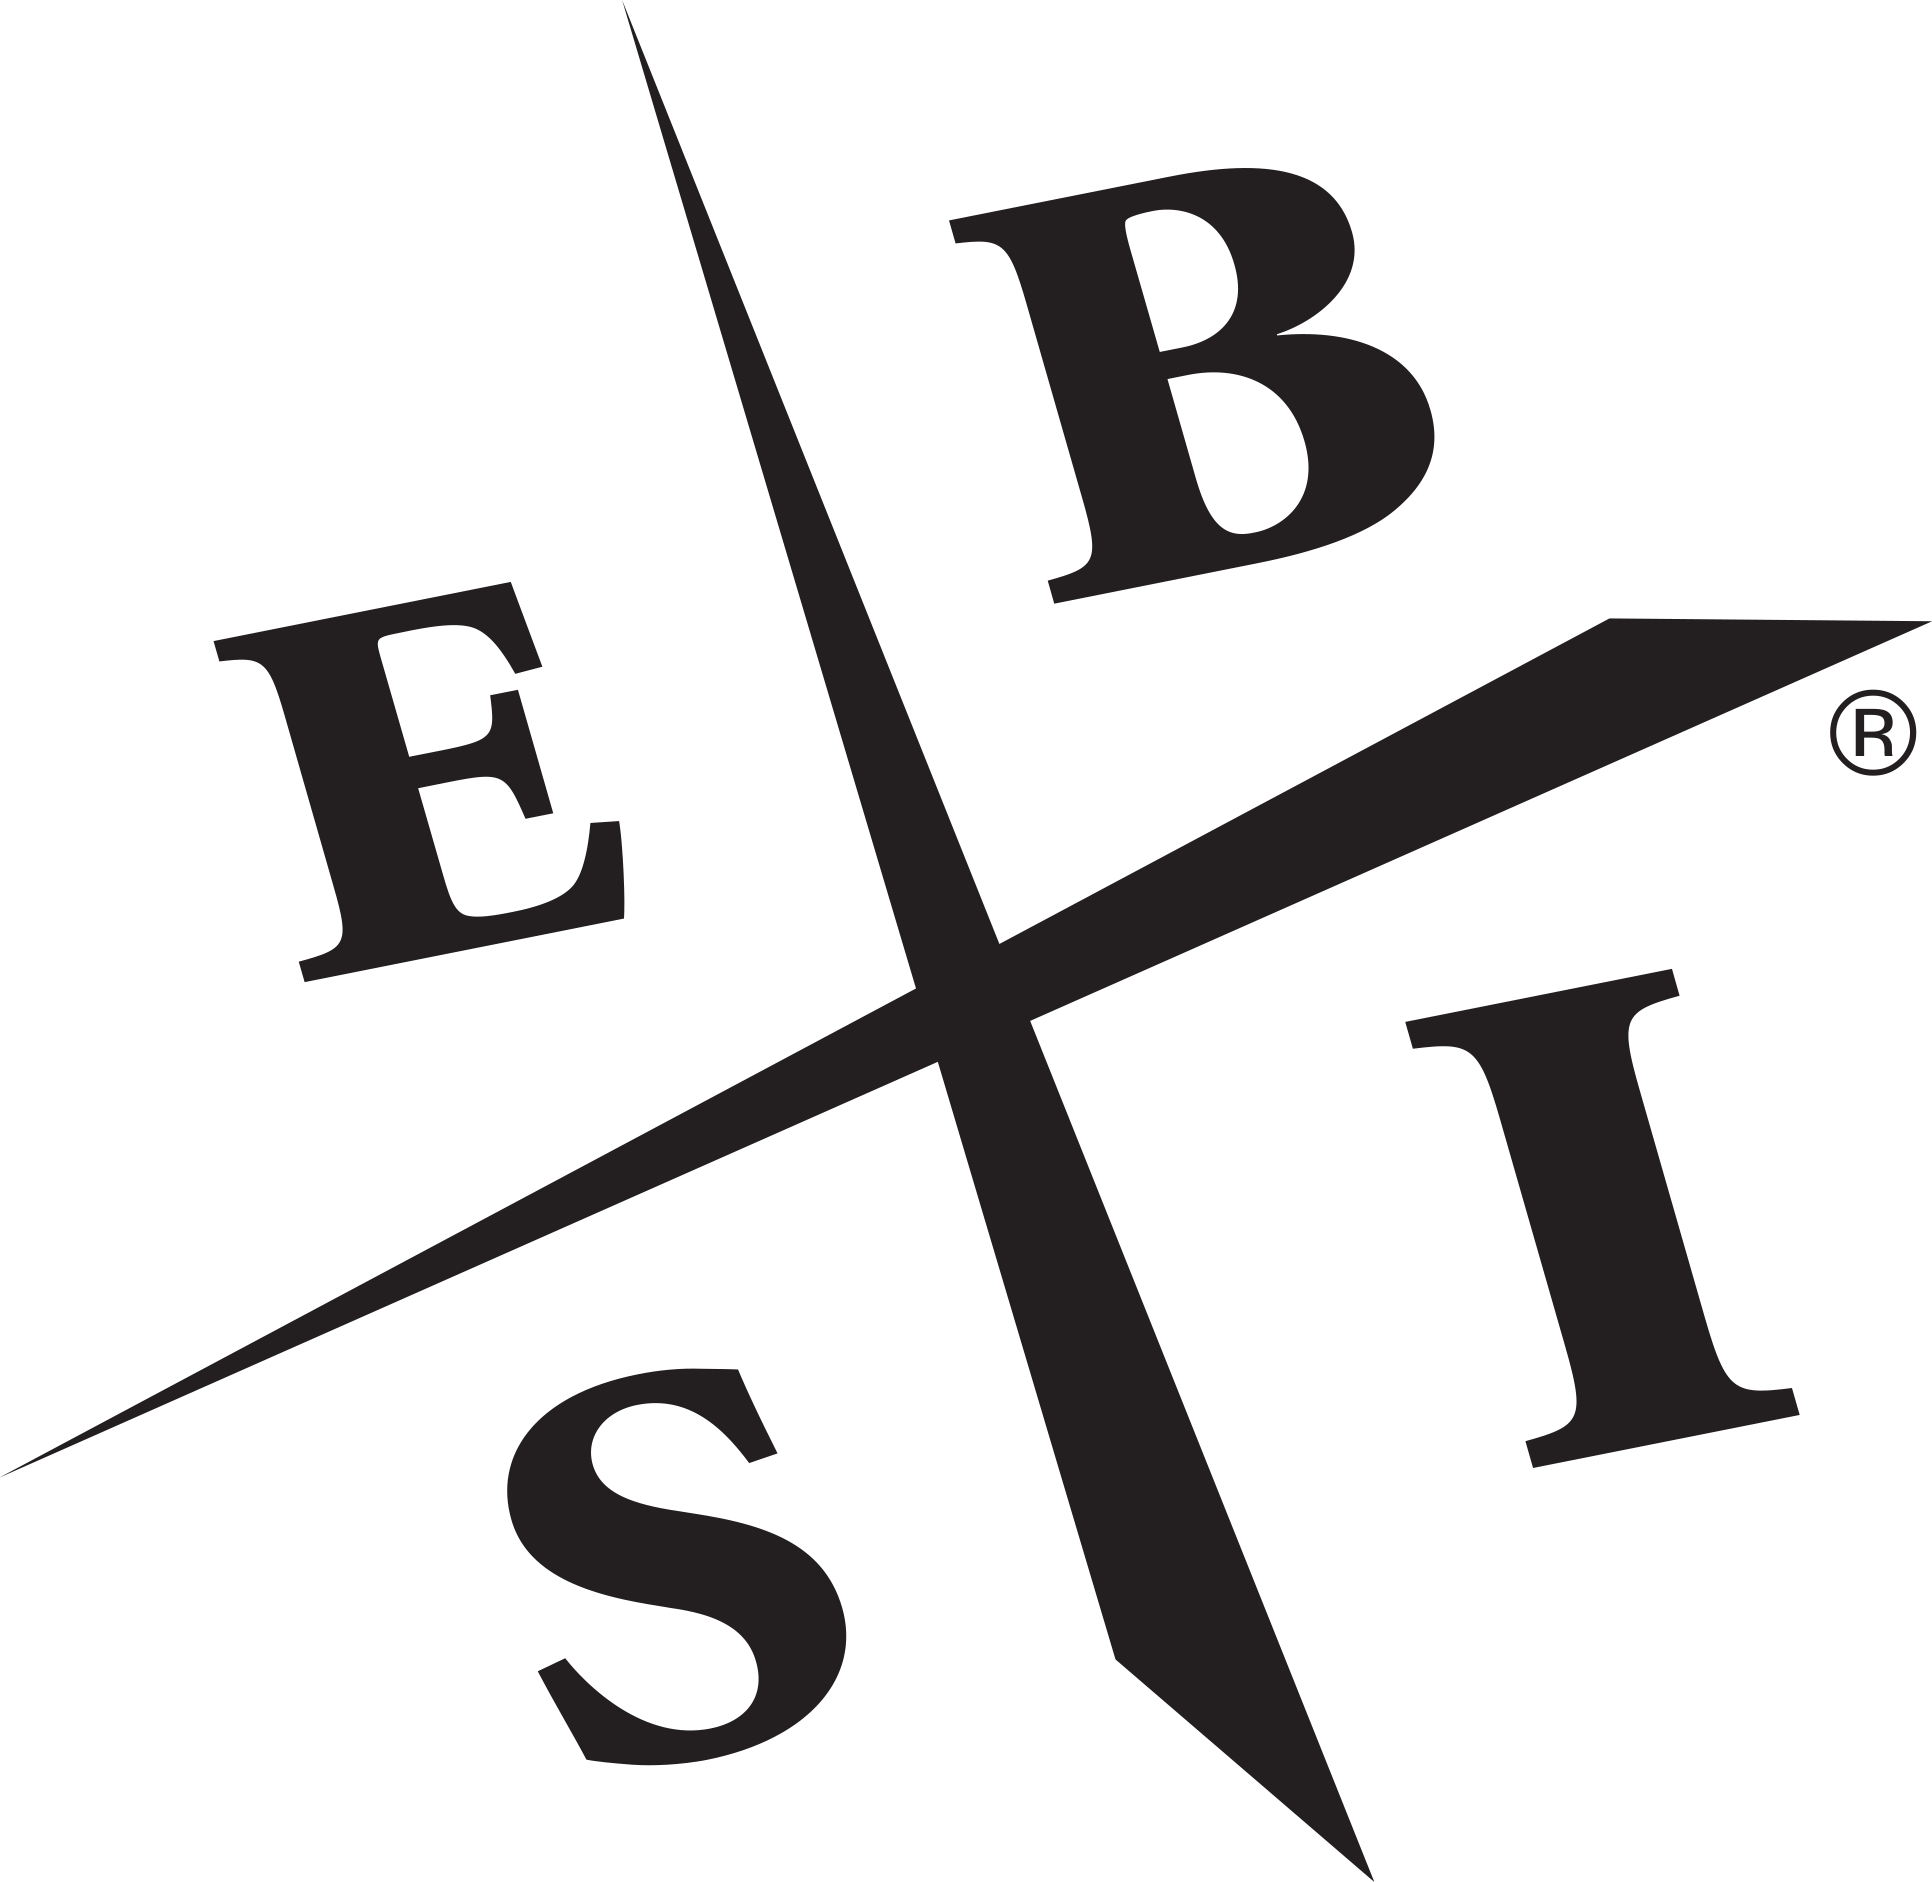 ESBI graphic